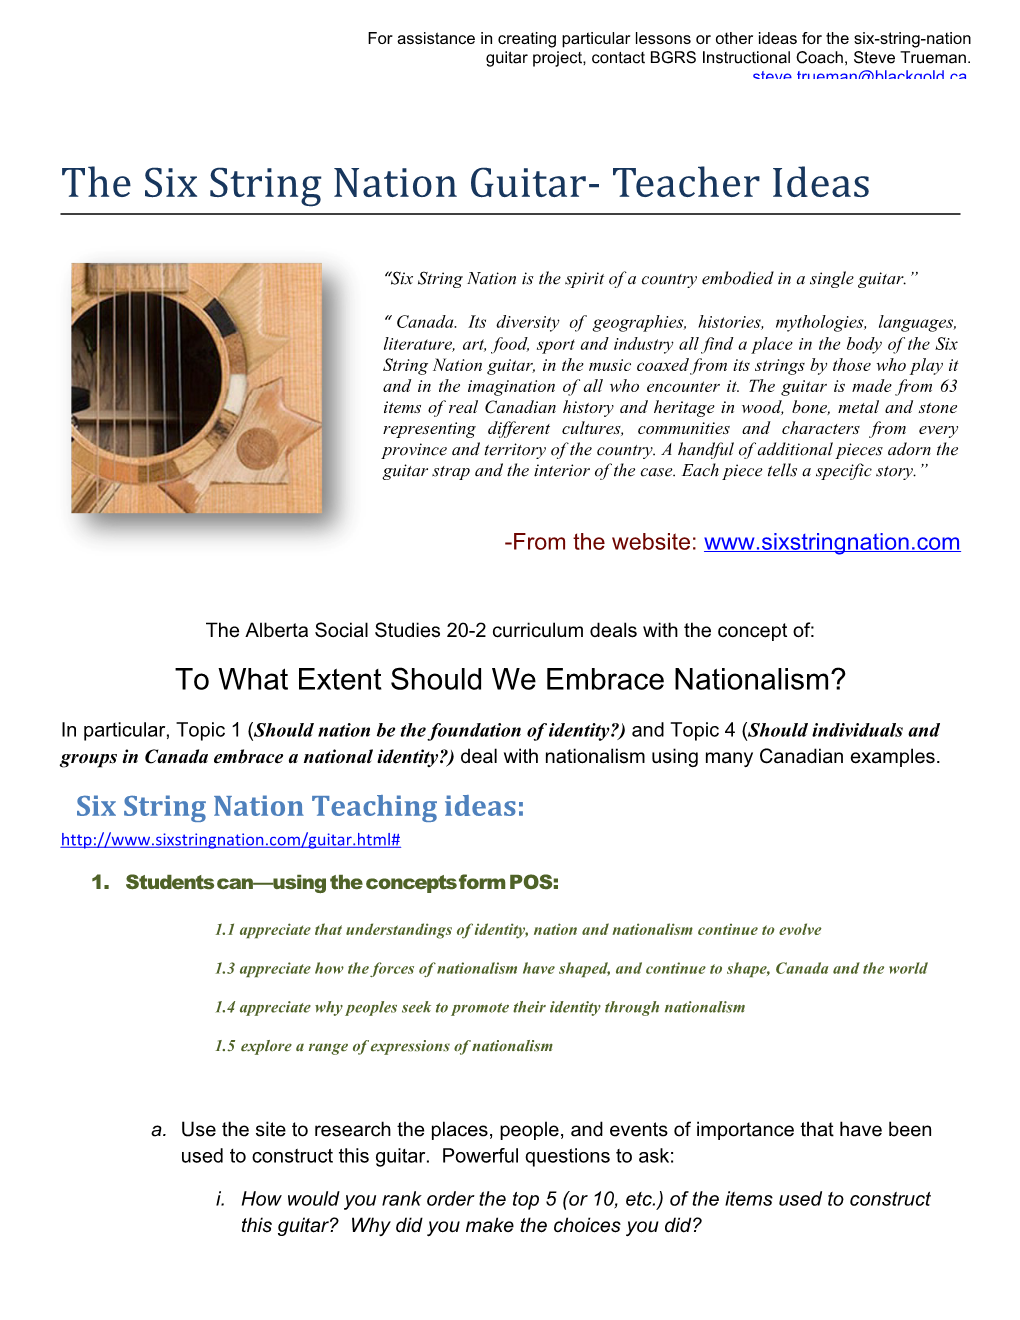 The Six String Nation Guitar- Teacher Ideas